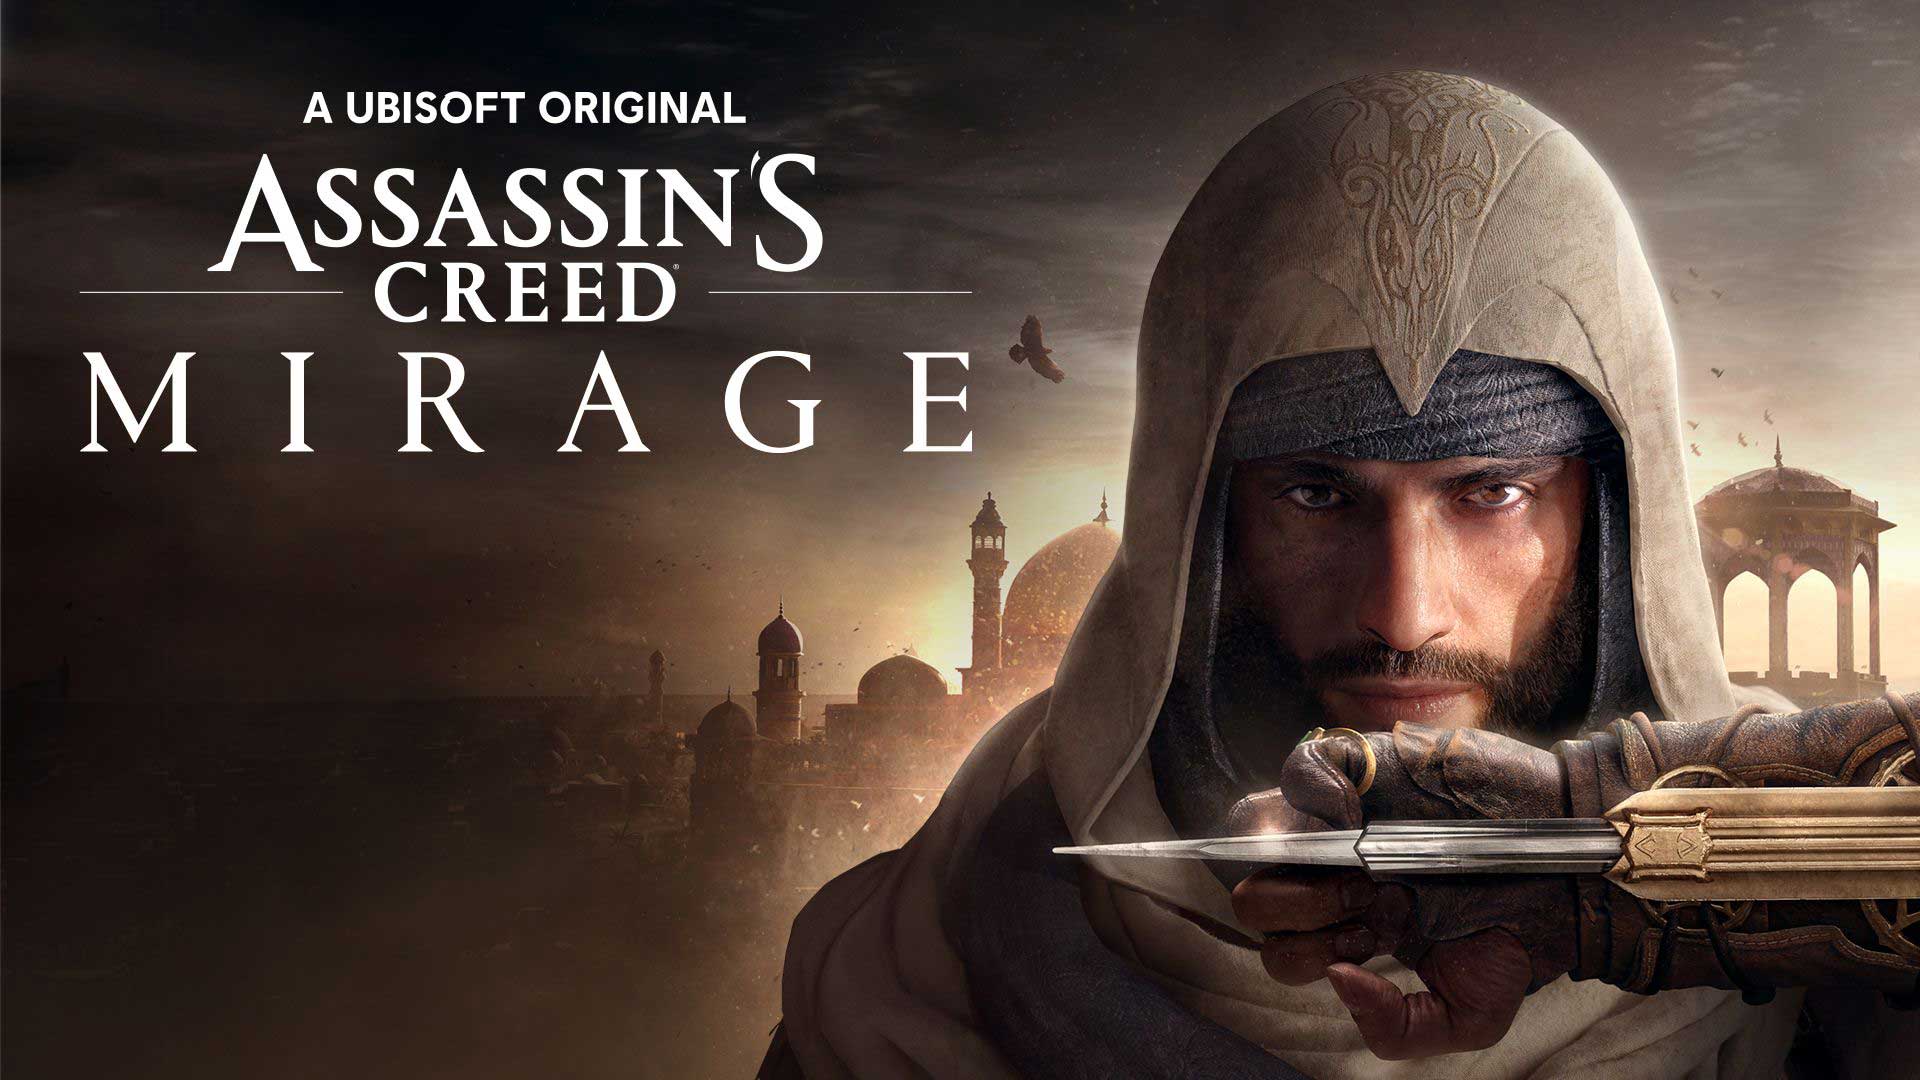 Assassin’s Creed Mirage, Core of a Game, coreofagame.com